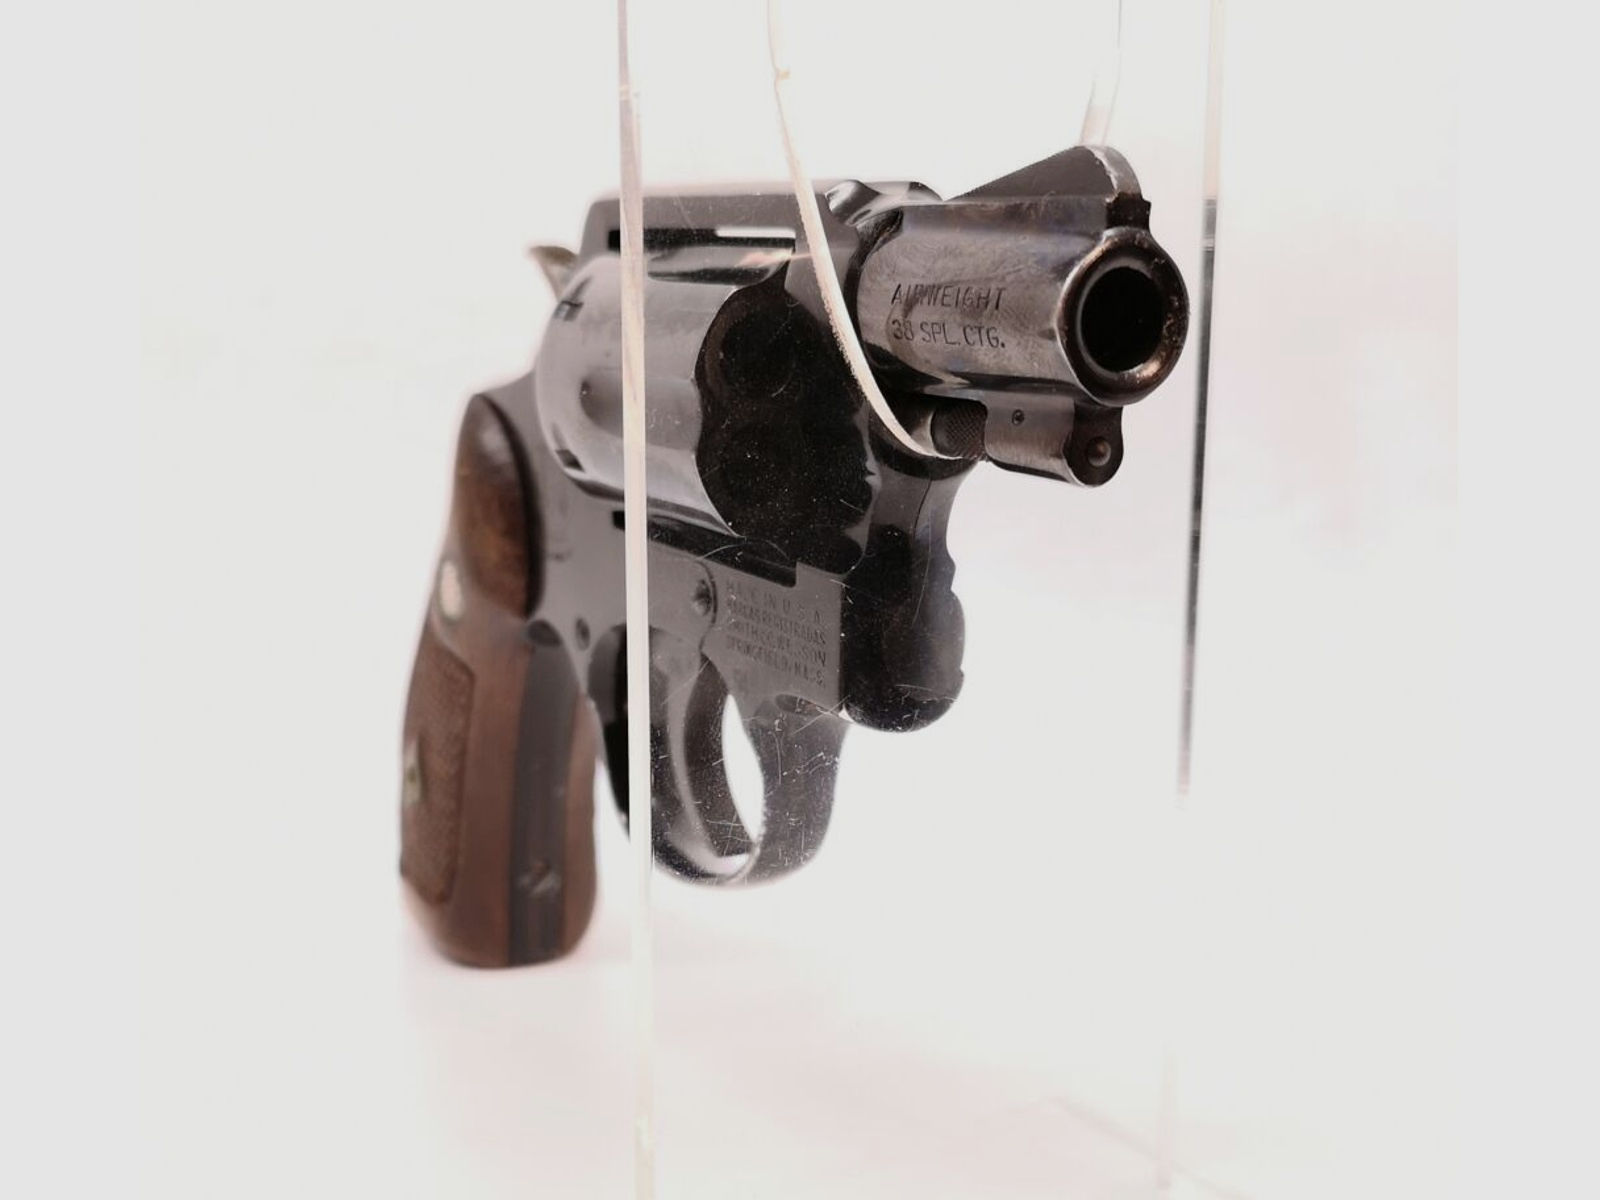 Smith & Wesson	 Mod. 17-1, kurze Fangschusswaffe, mit 50mm Lauf